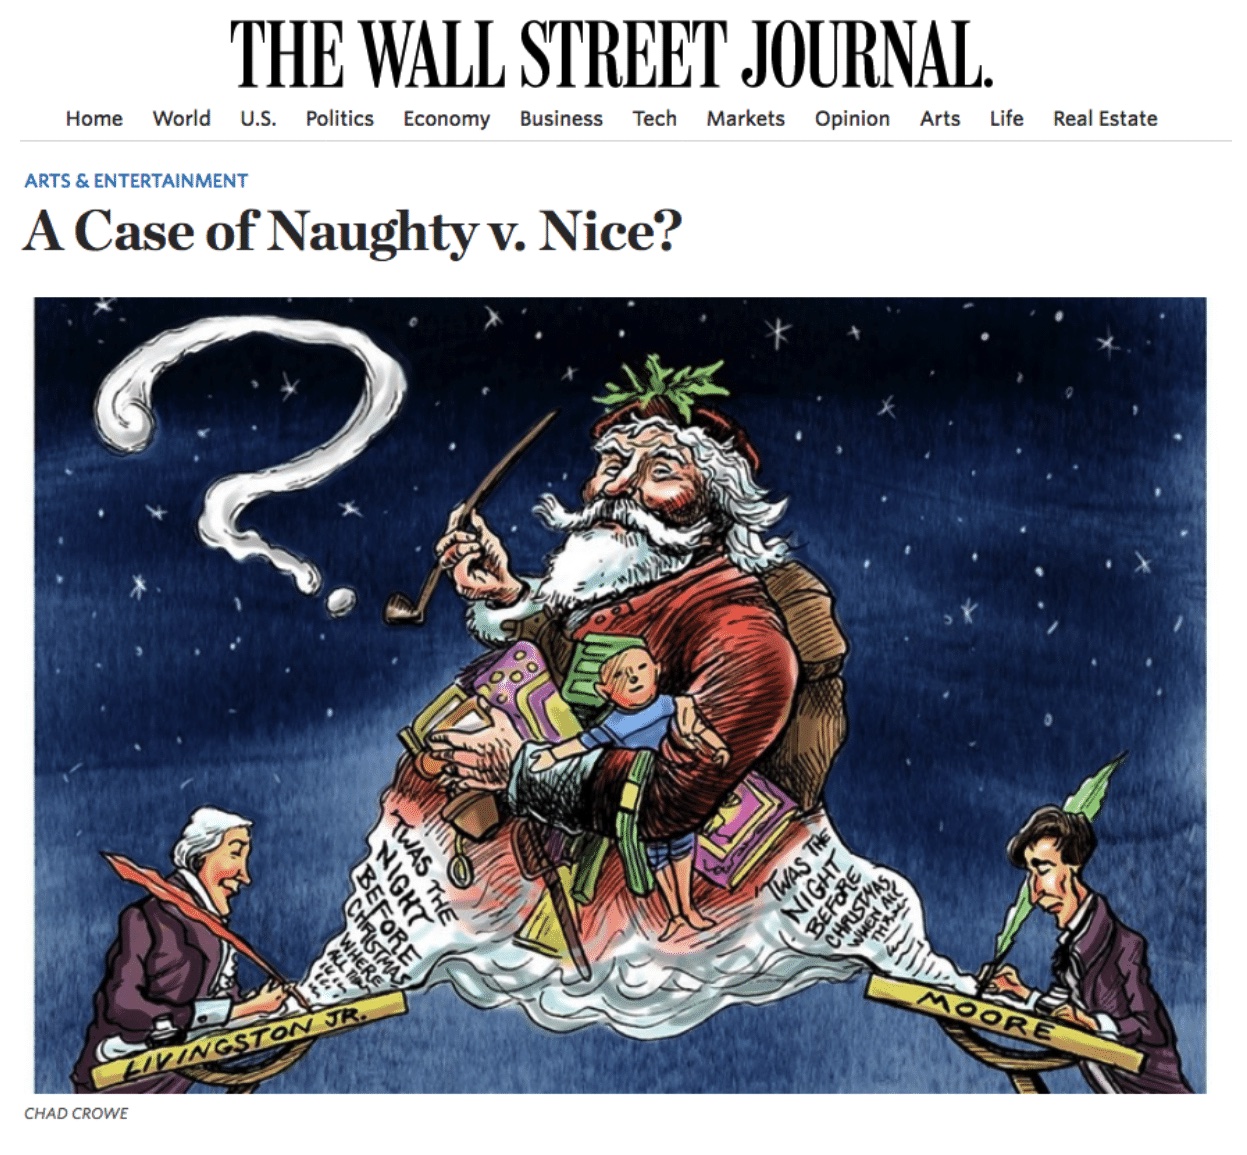 Wall Street Journal Image